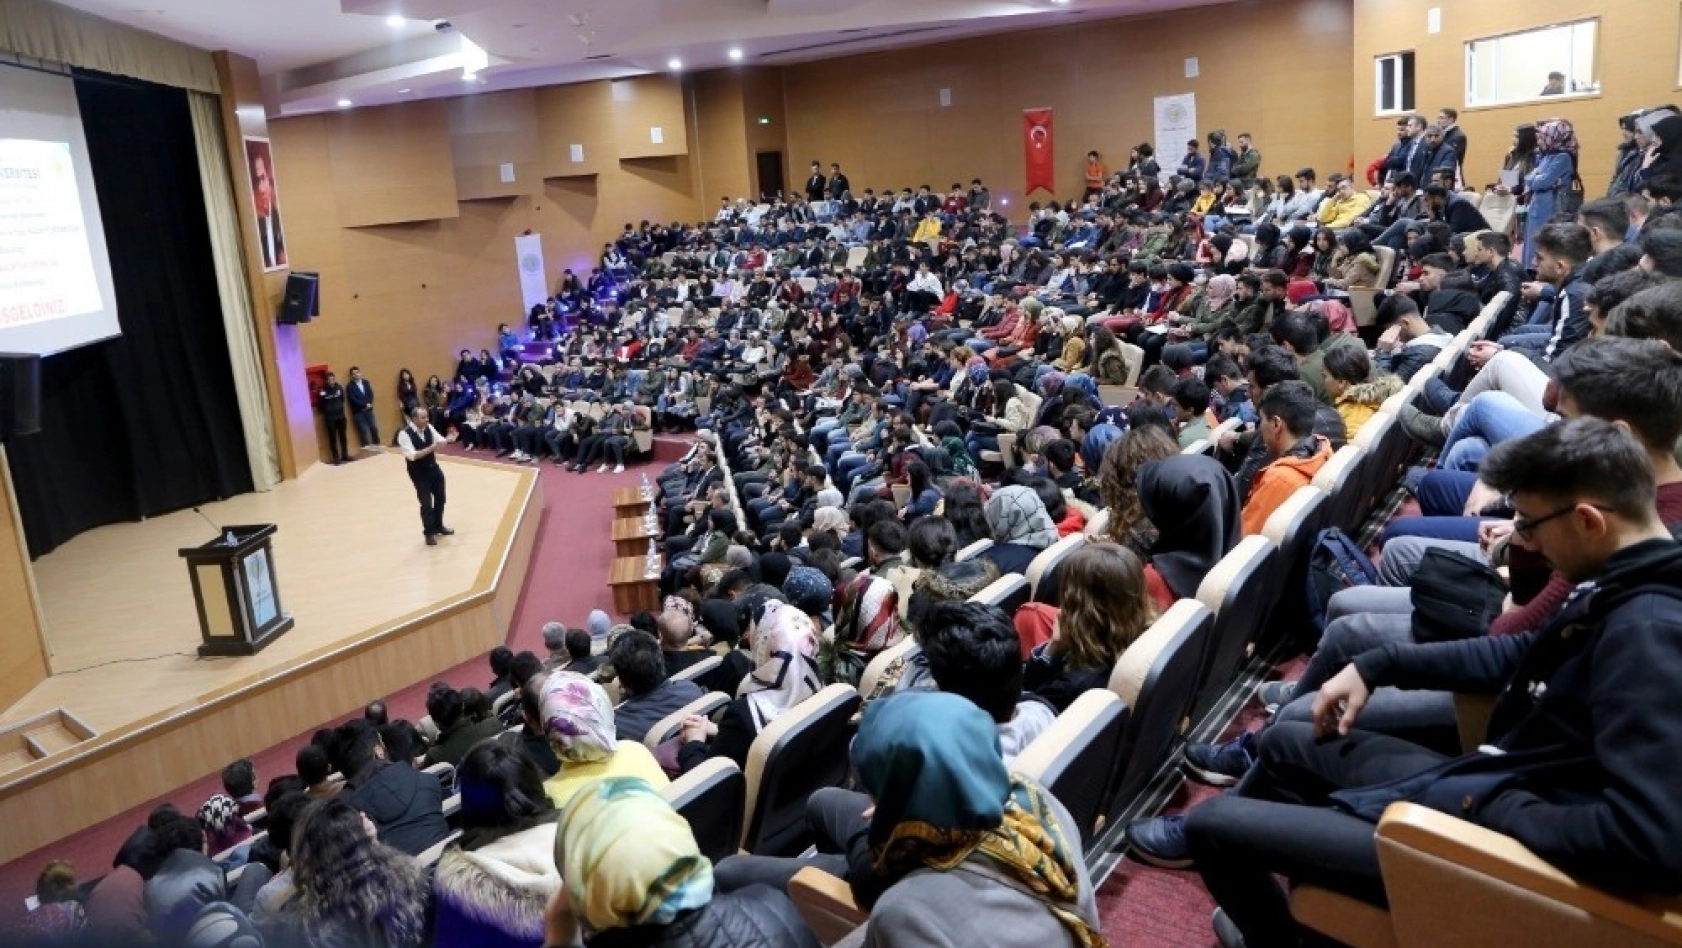 Bingöl Üniversitesi'nde 'Oku, Karanlıktan Aydınlığa' Konferansı 